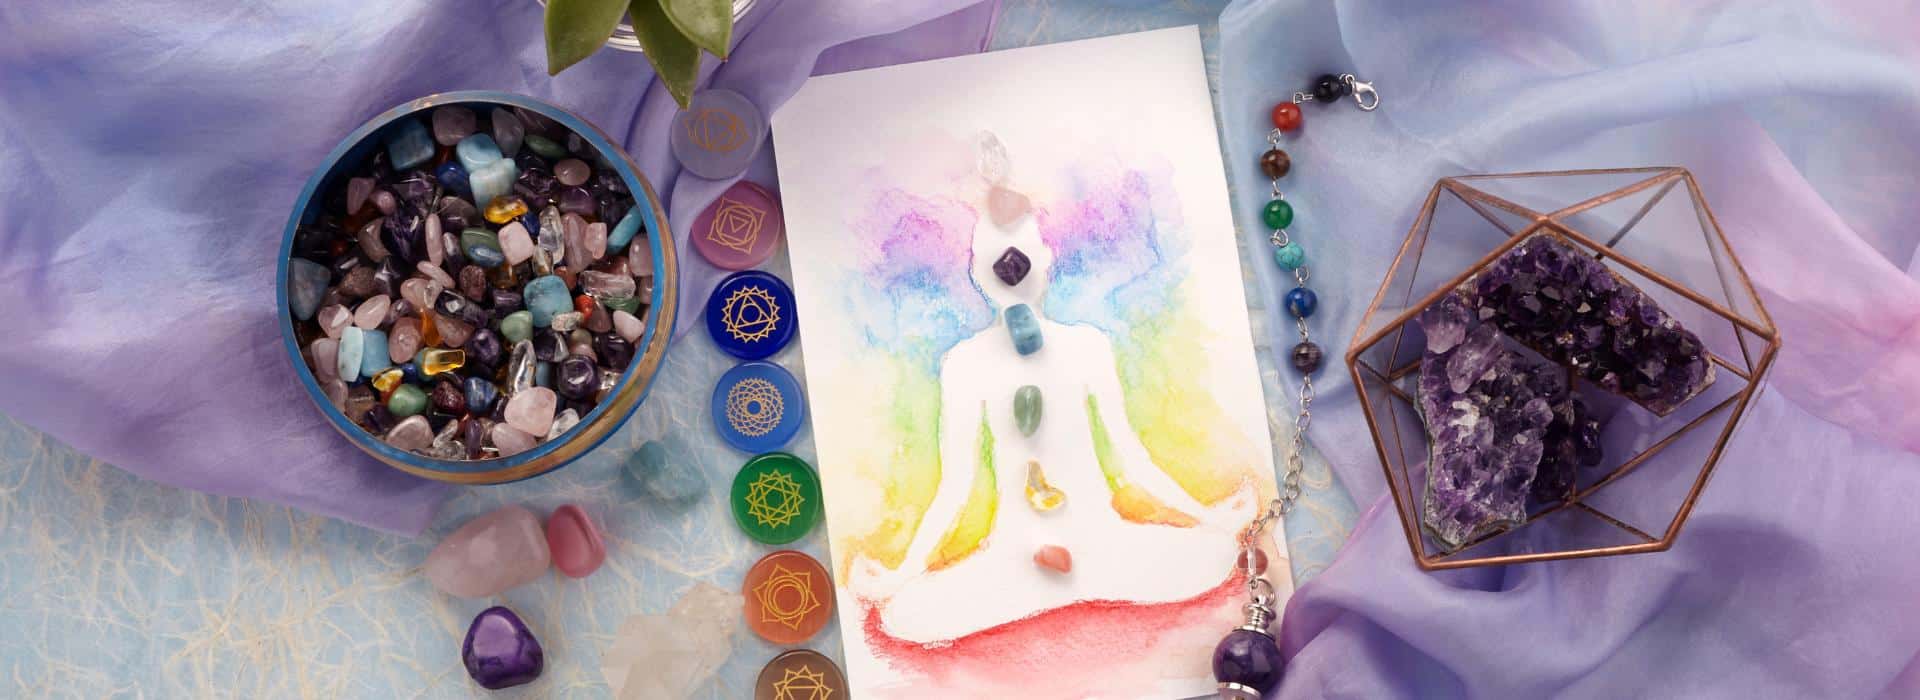 Chakra picture and crystals | Chakra Journalling for Balance & Insight | Shine Body & Bath Chakra Soap | Blog